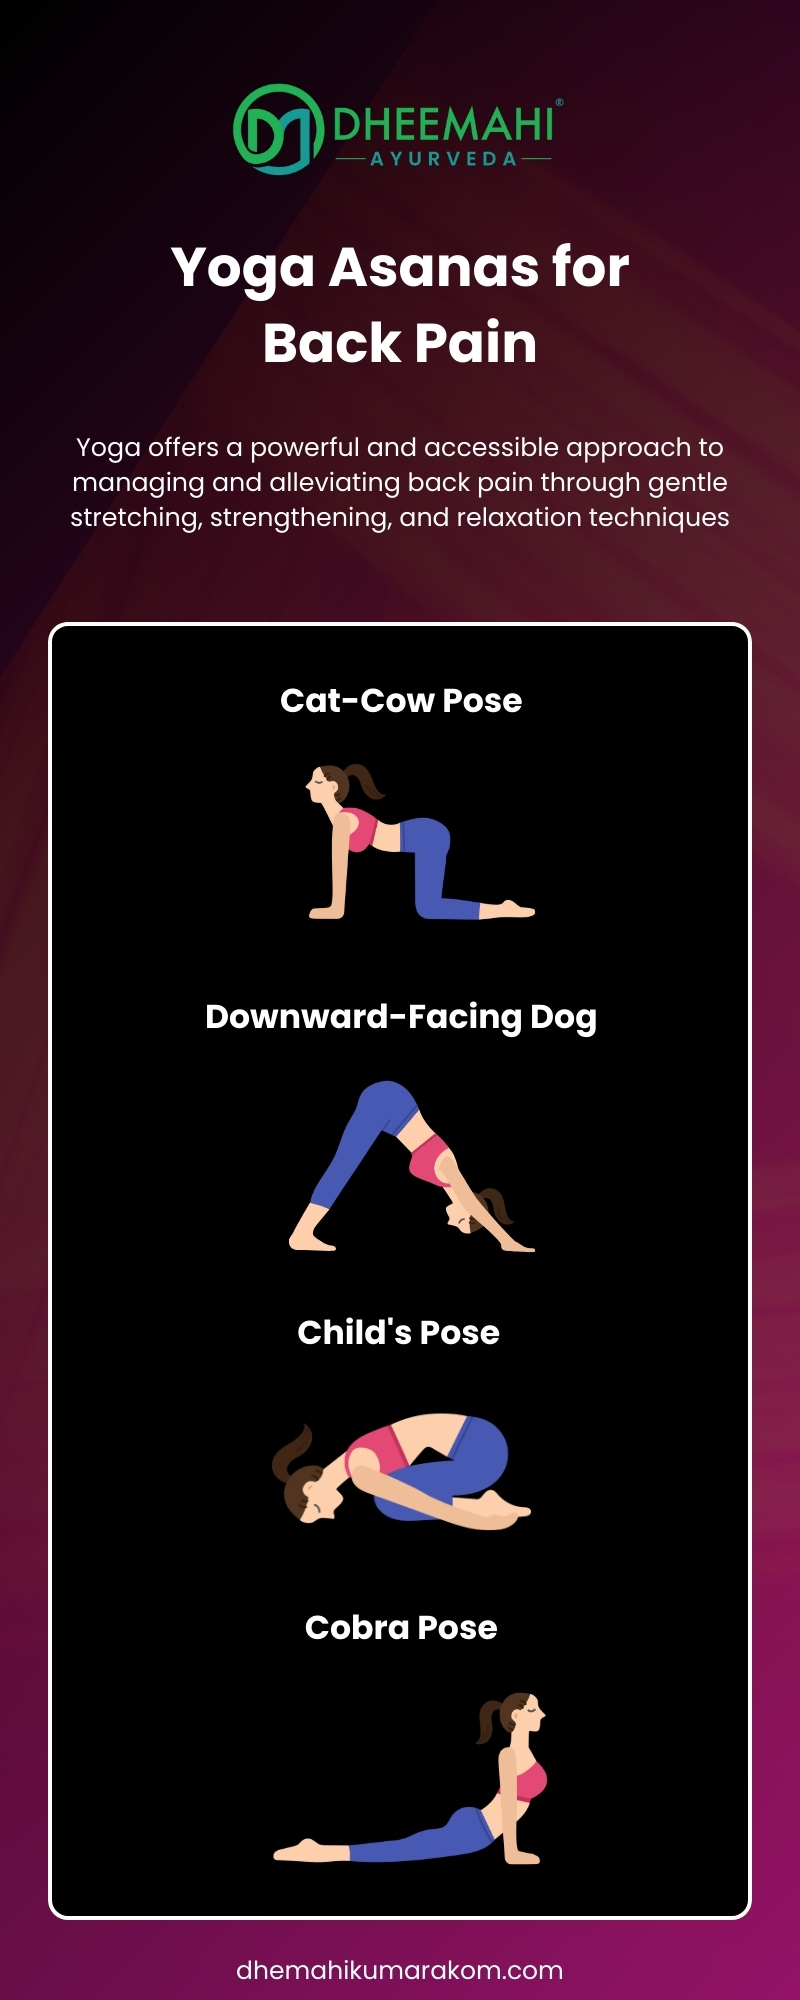 Yoga Asanas for back pain